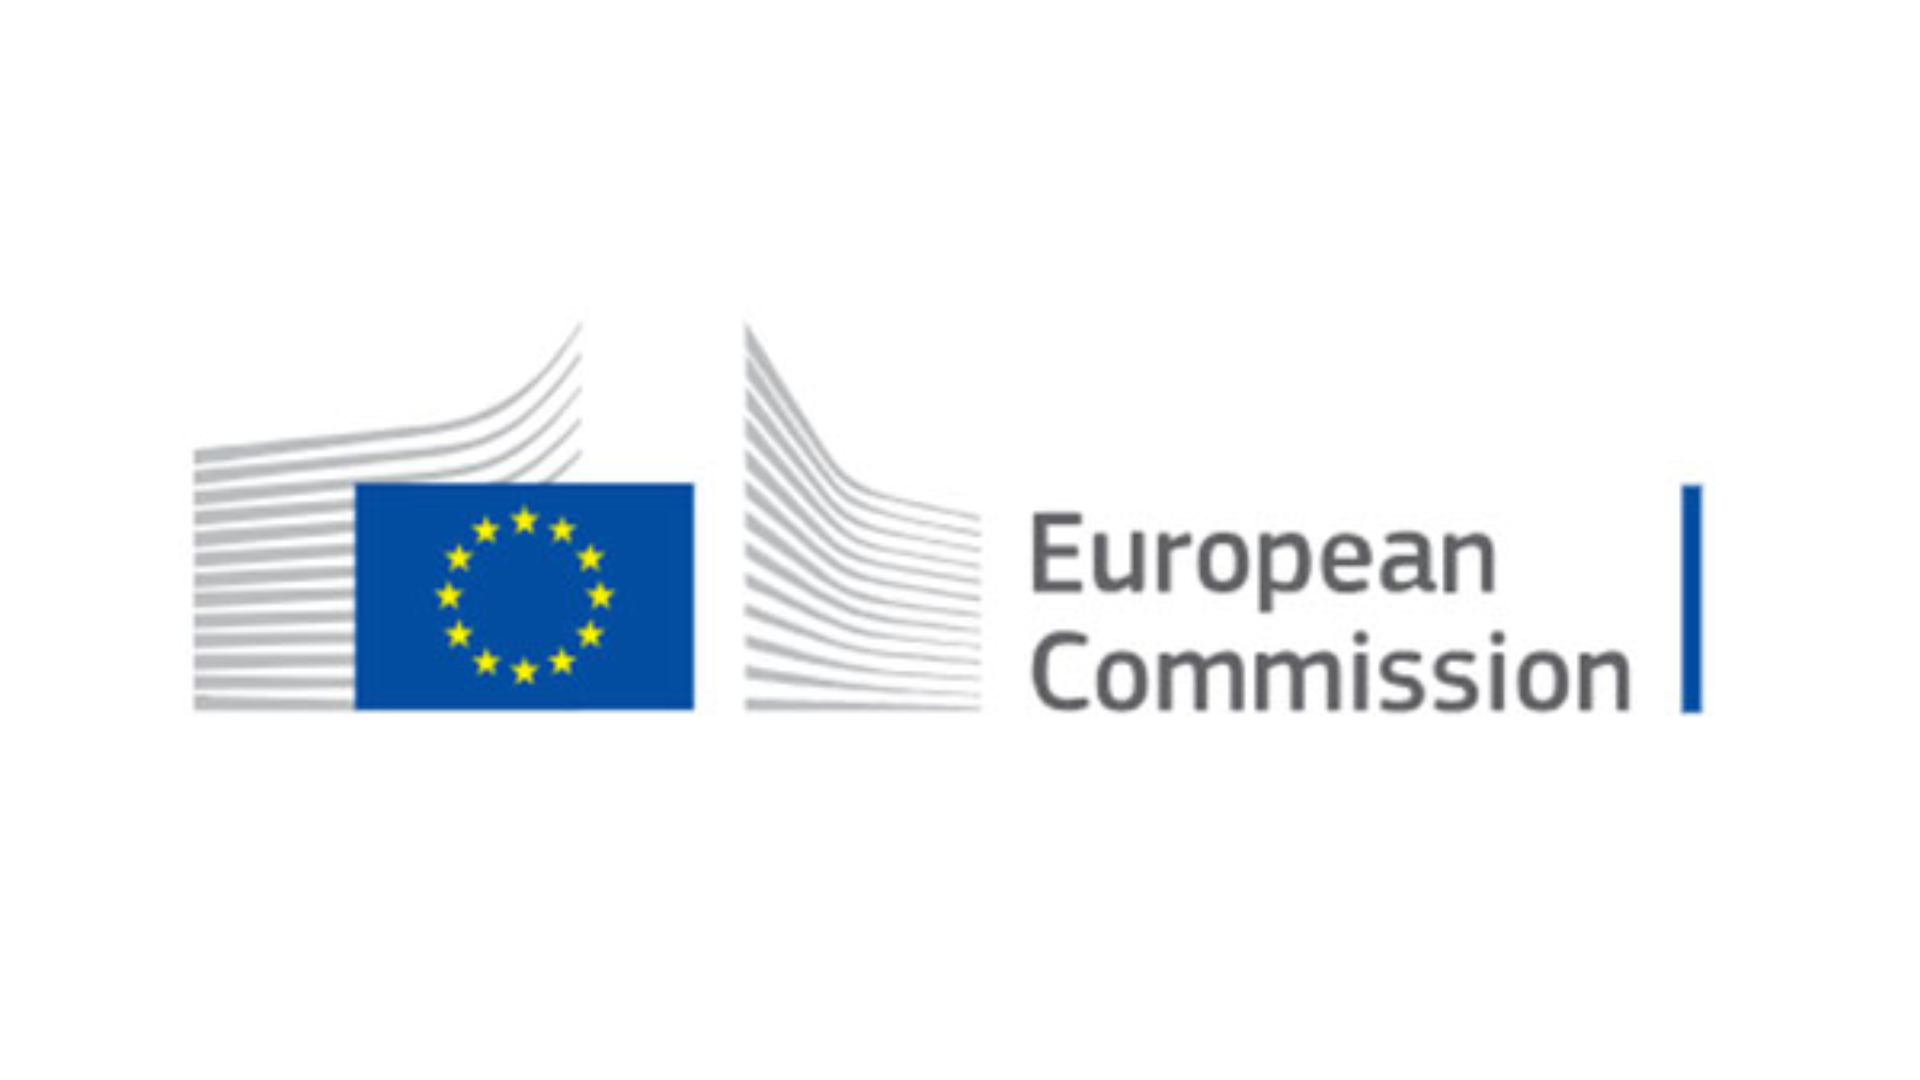 European Commission Raises Schengen Visa Fees Globally, Effective June 11